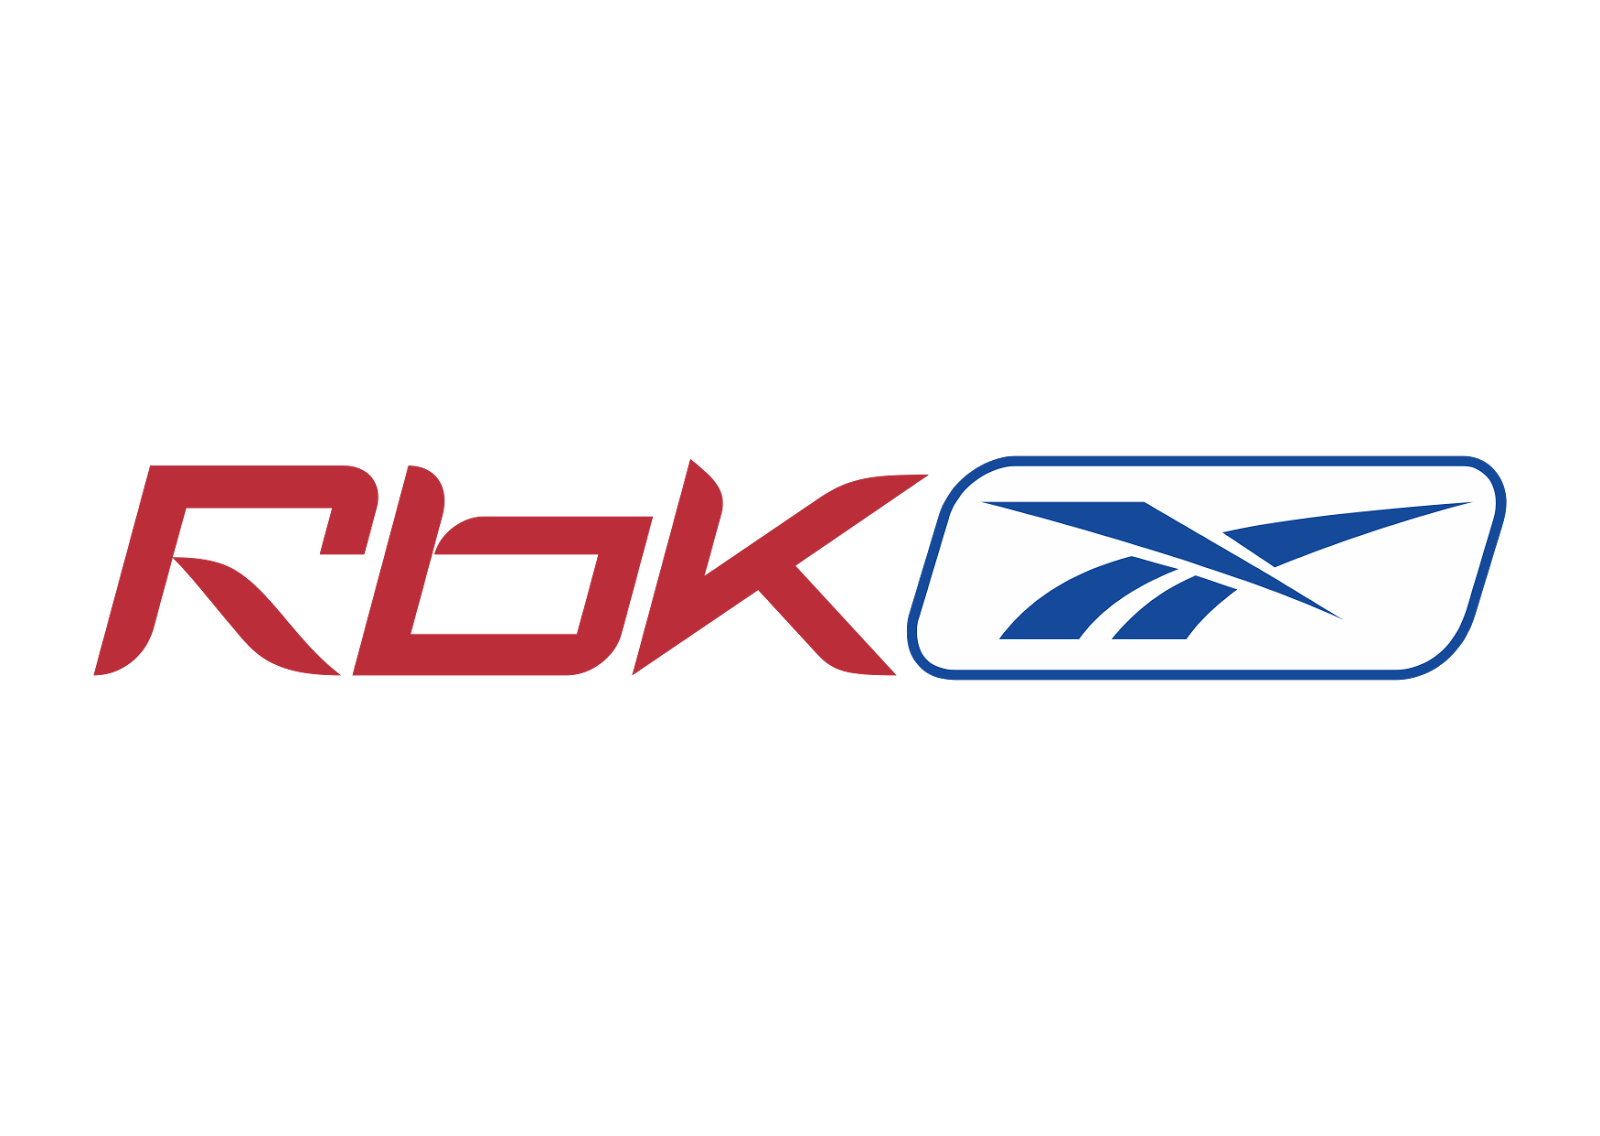 reebok logo picture 7038